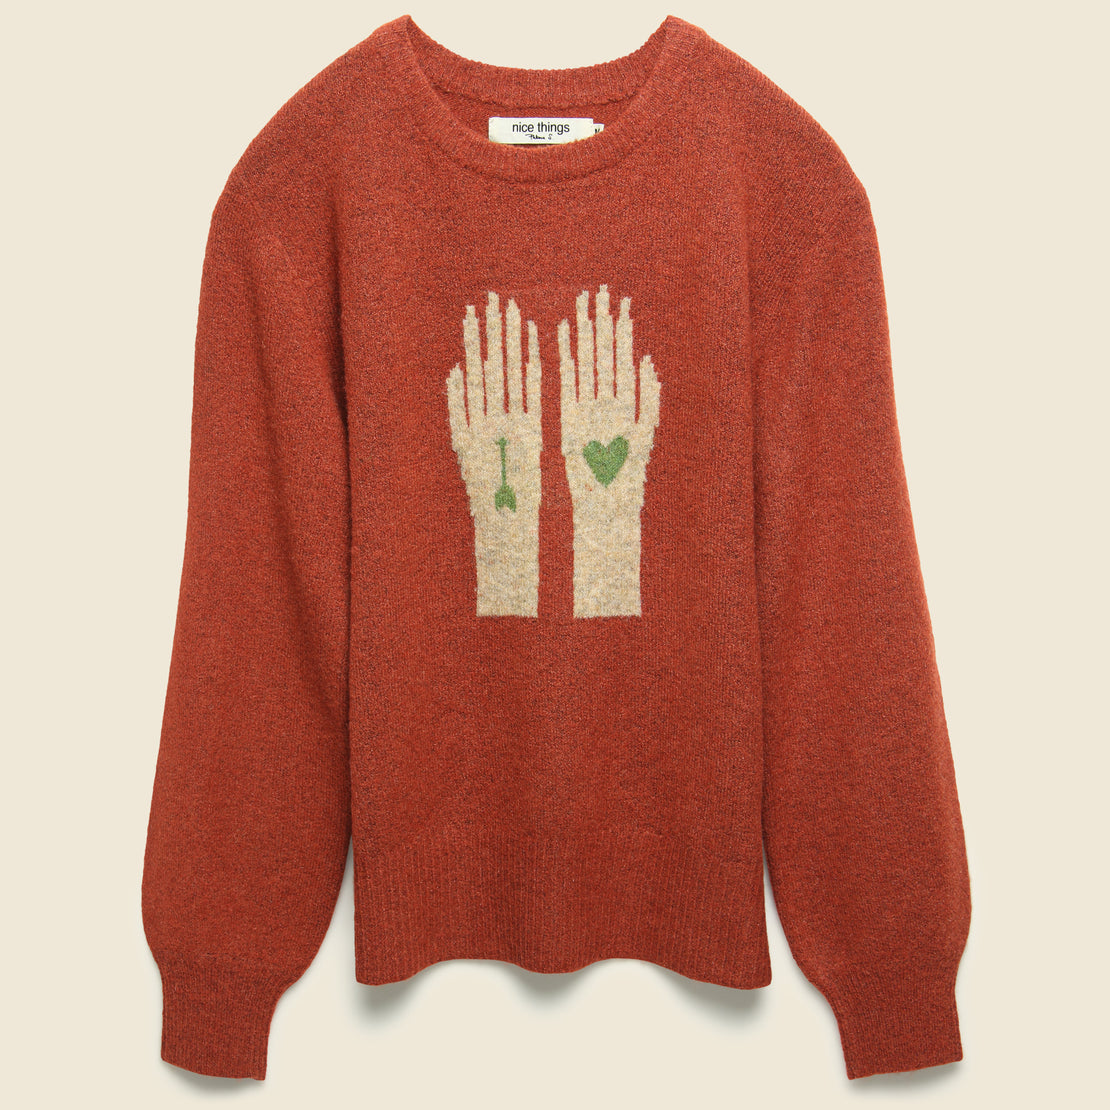 Nice Things Gloves Intarsia Sweater - Rust